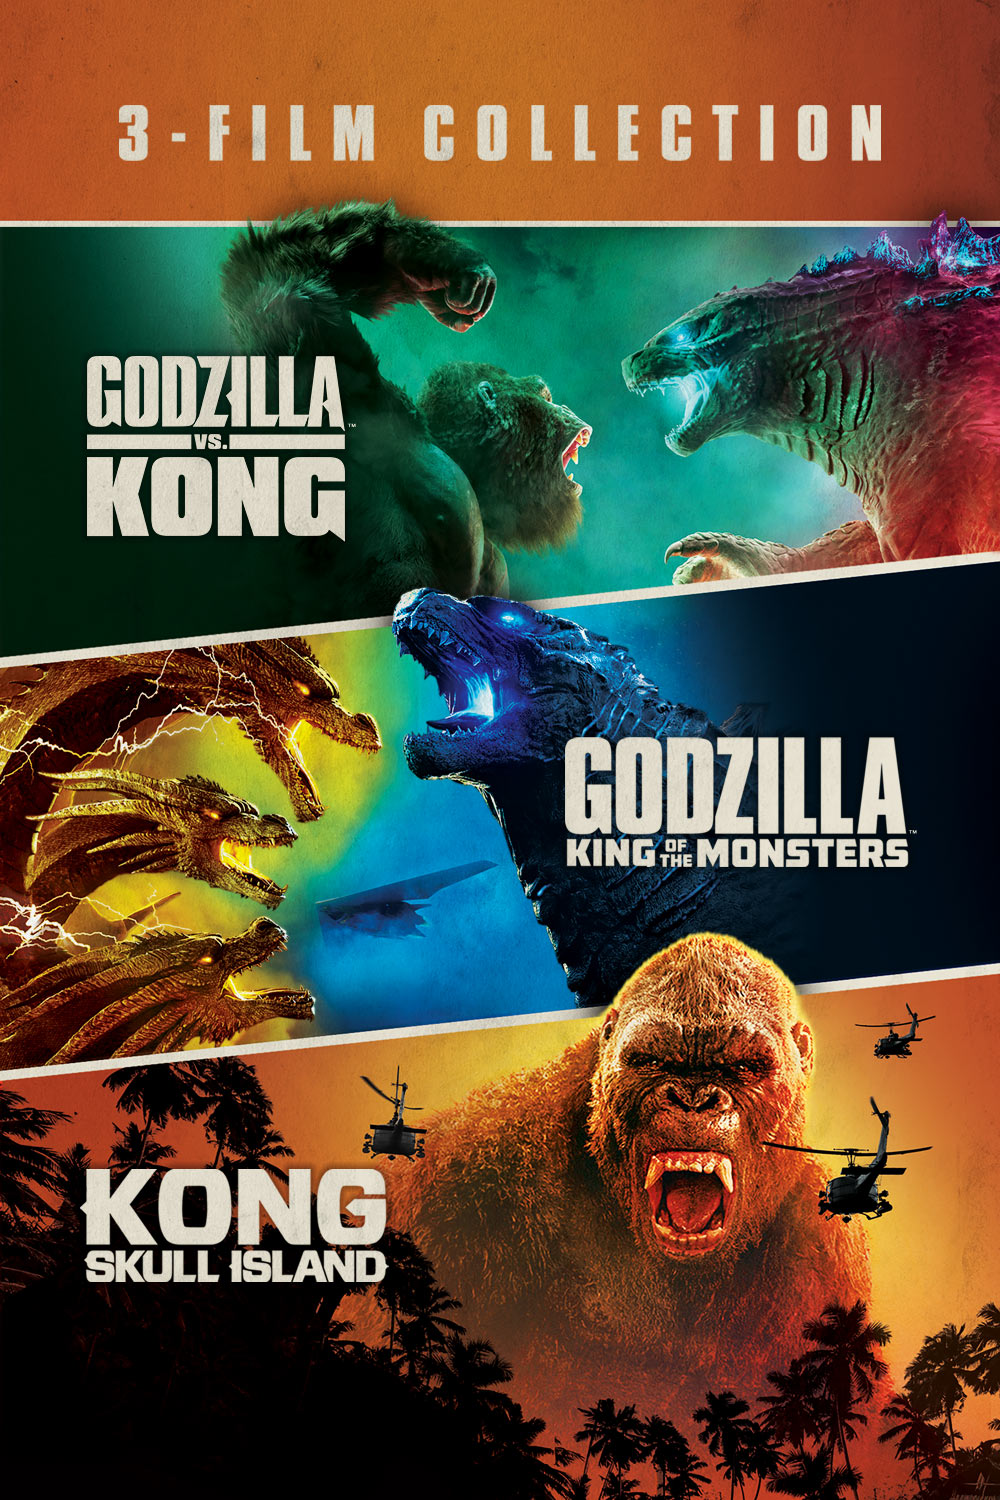 Watch Godzilla & Kong 3-Film Collection Online